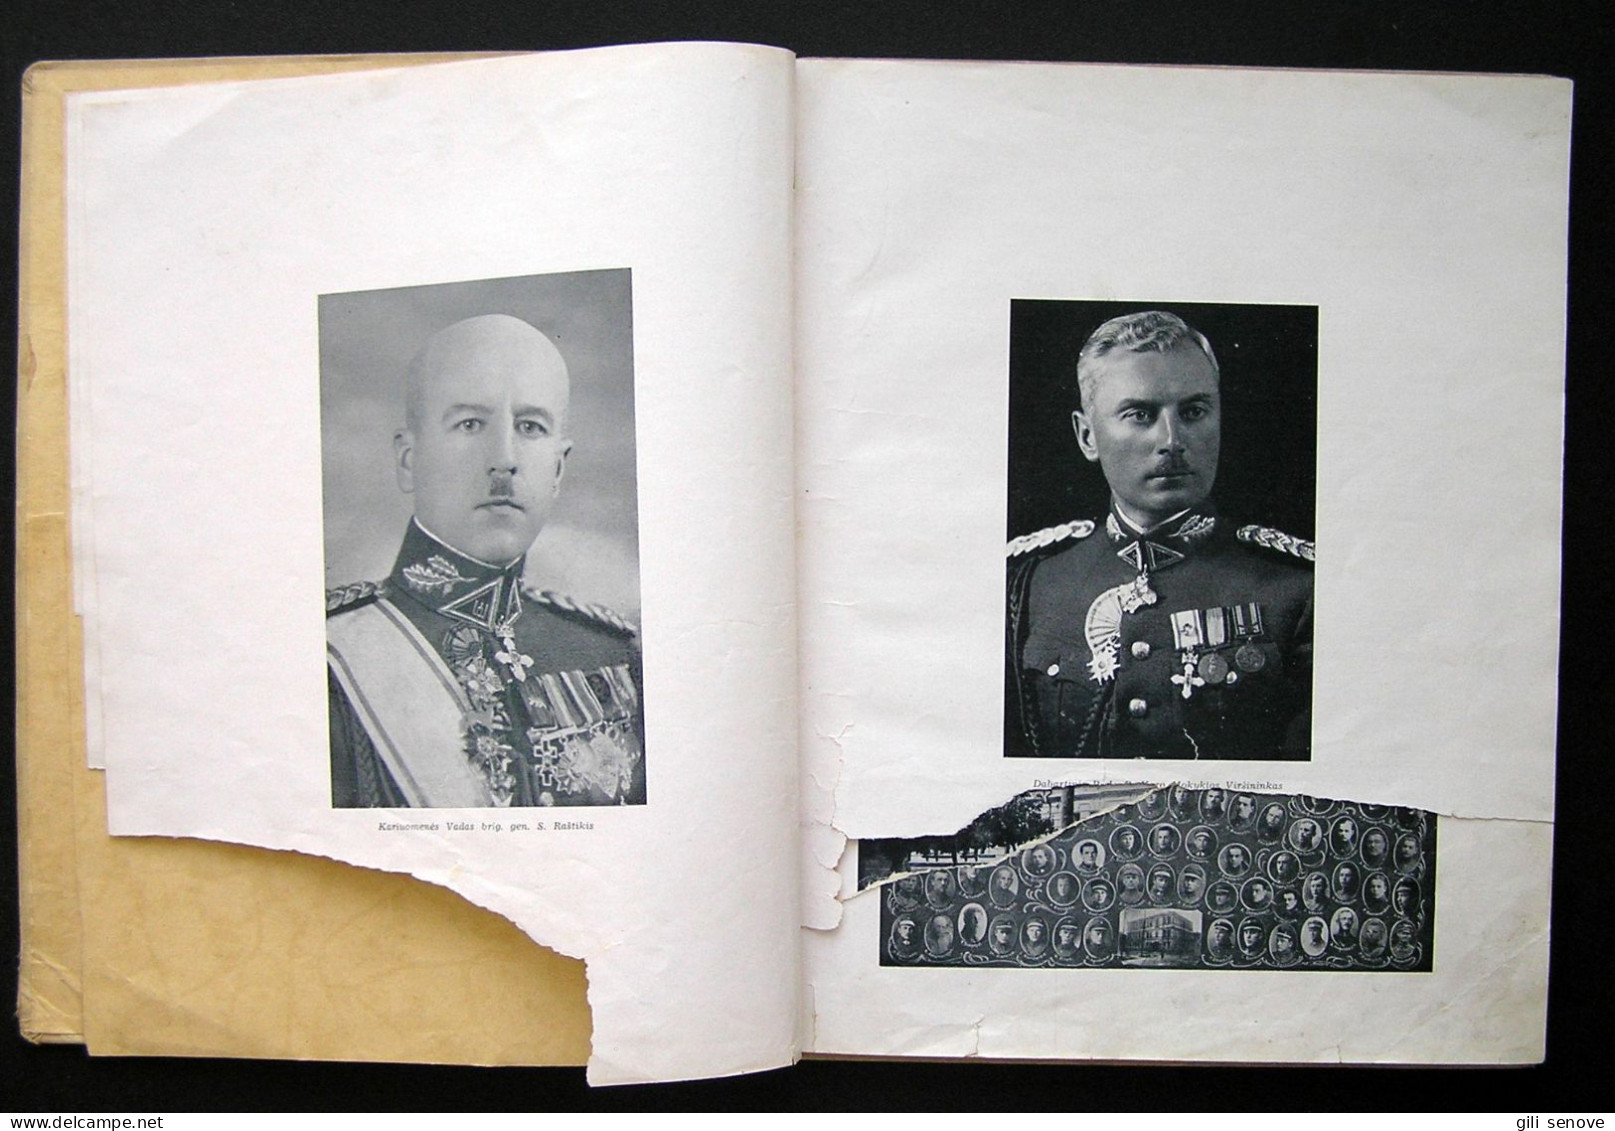 Lithuanian Book / Pirmojo Lietuvos Prezidento Karo Mokykla, 1919–1939 1939 - Oude Boeken